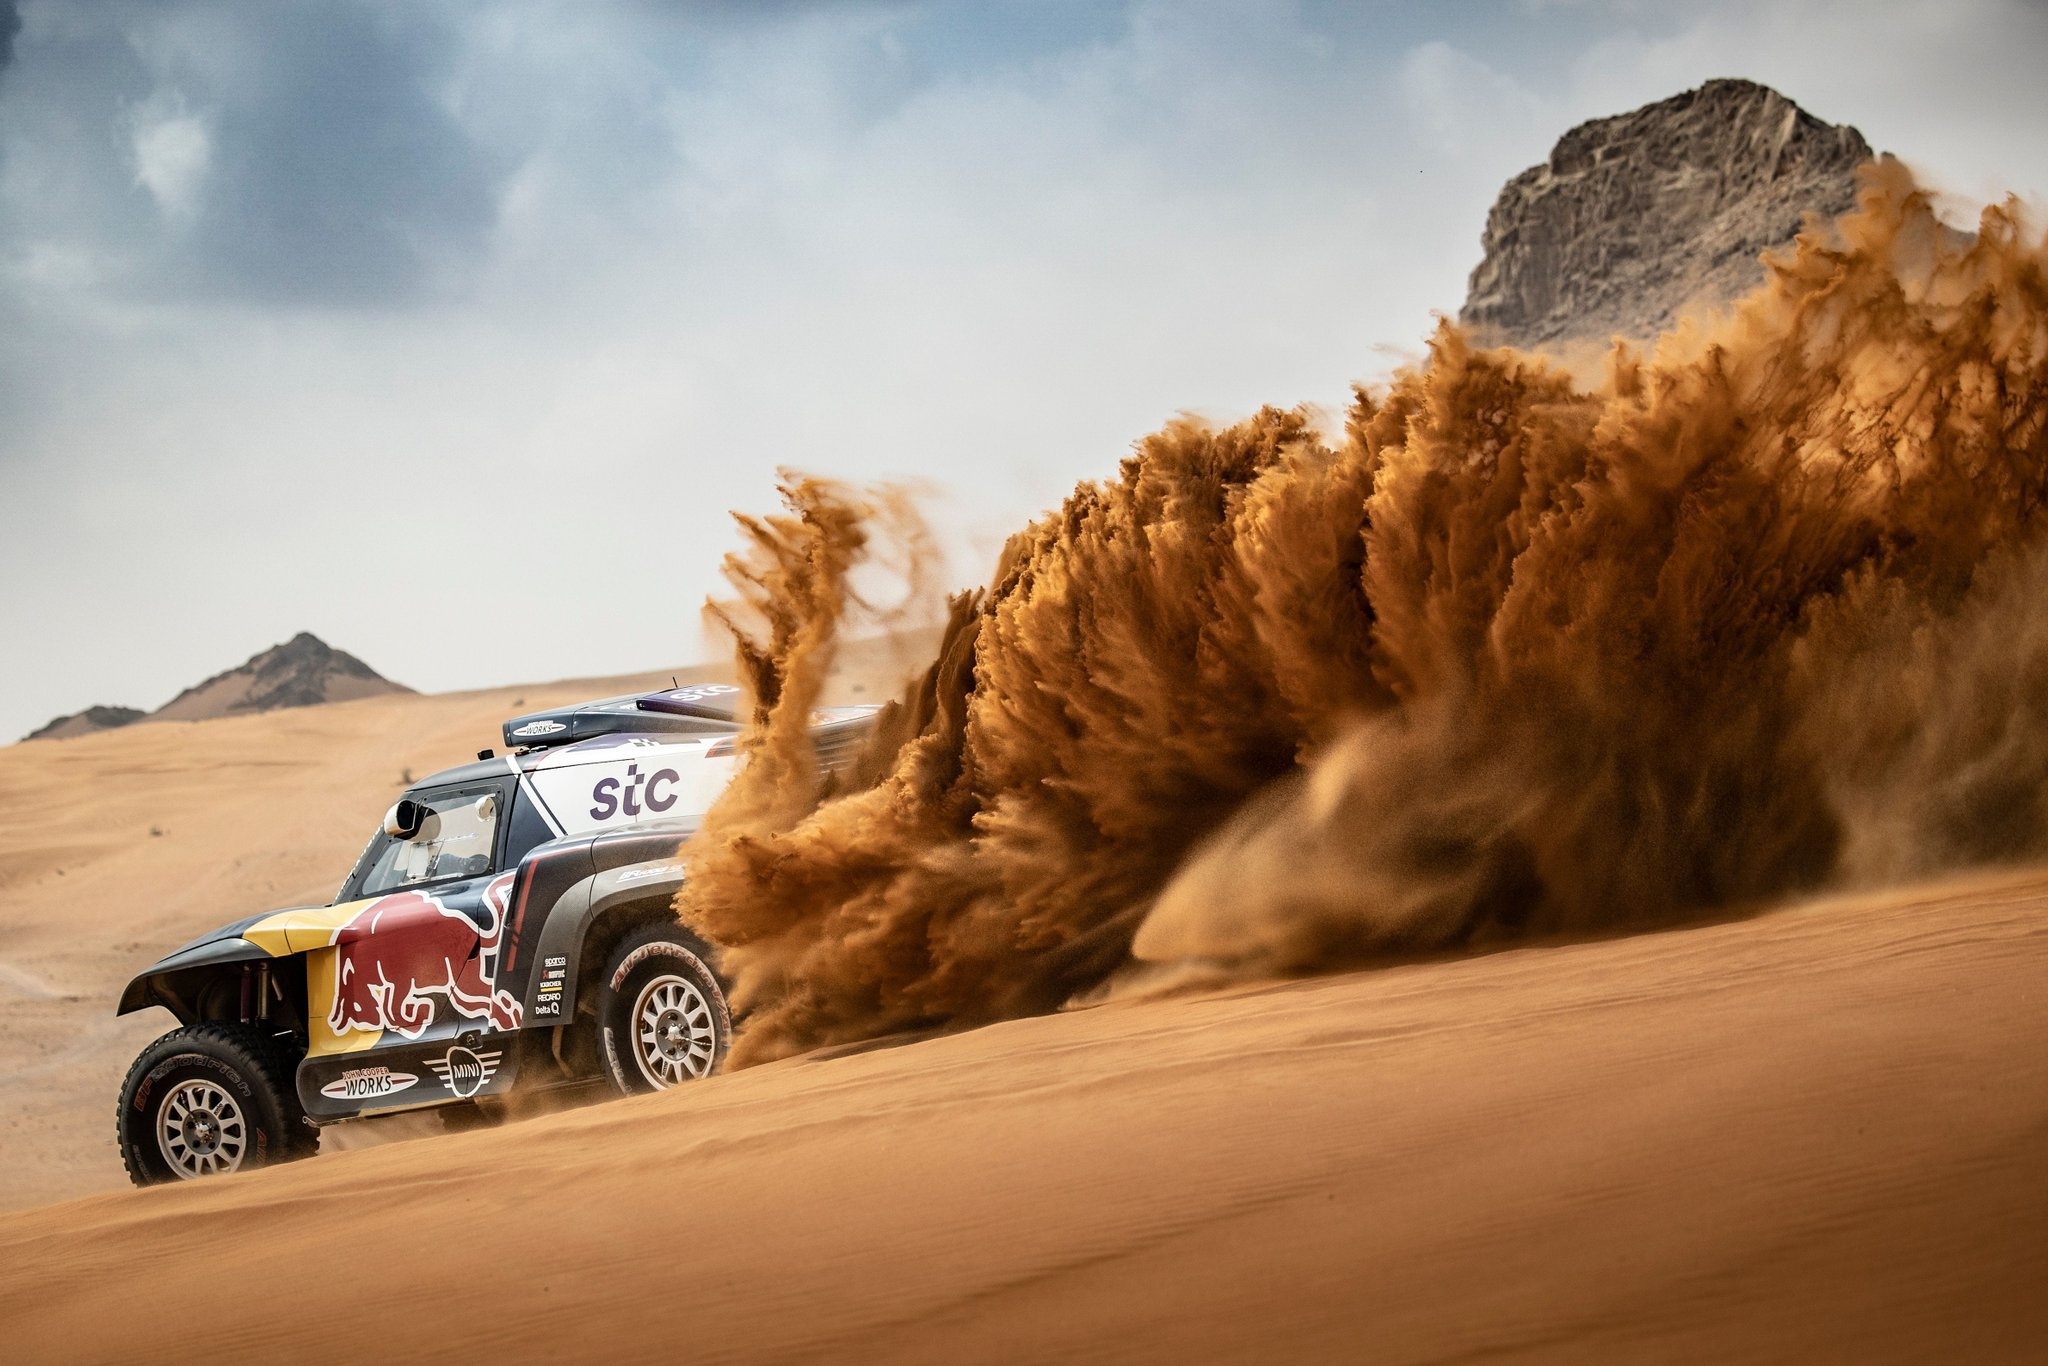 Rally Raid: Red Bull Desert Wings, Off-Road Racing Car, Enduro, Sport Utility Vehicle, STC, Cross-Country Driving, 2021. 2050x1370 HD Wallpaper.